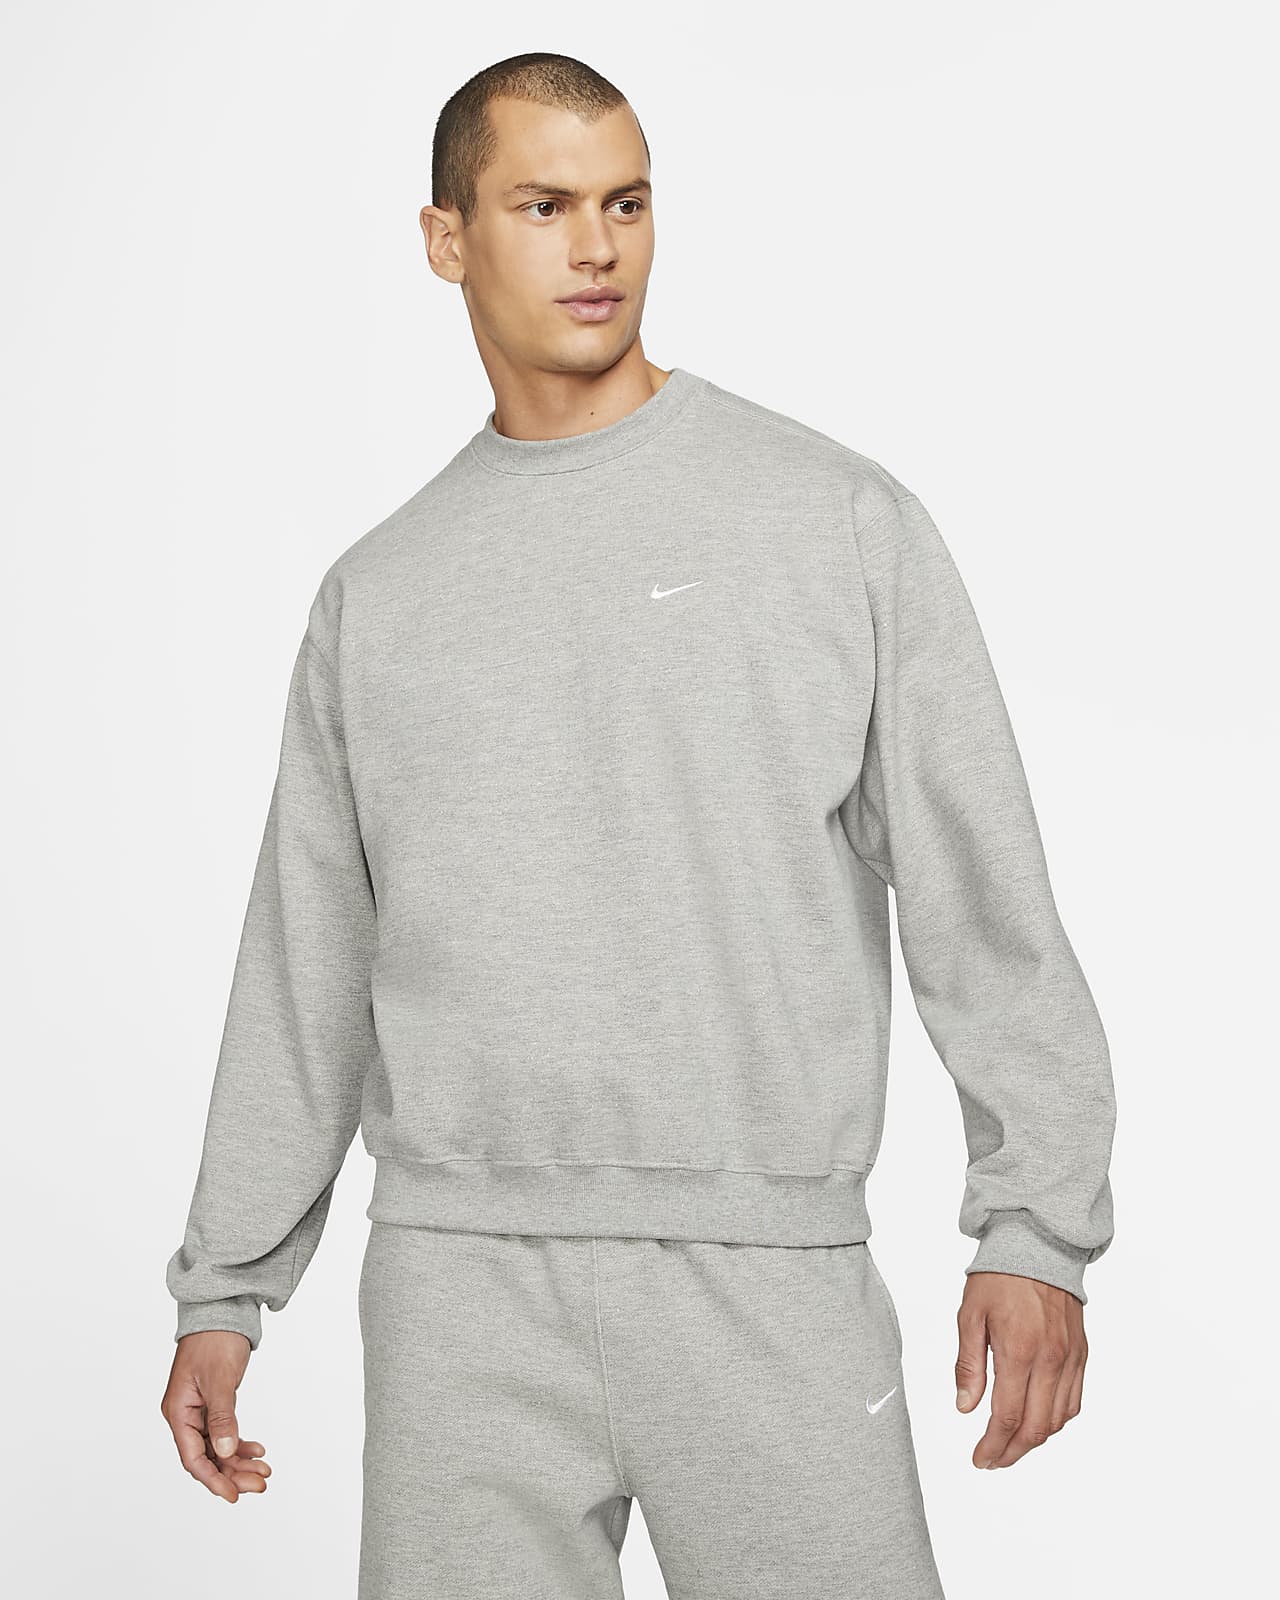 Nike "Made In the USA" Men's Crew Sweatshirt